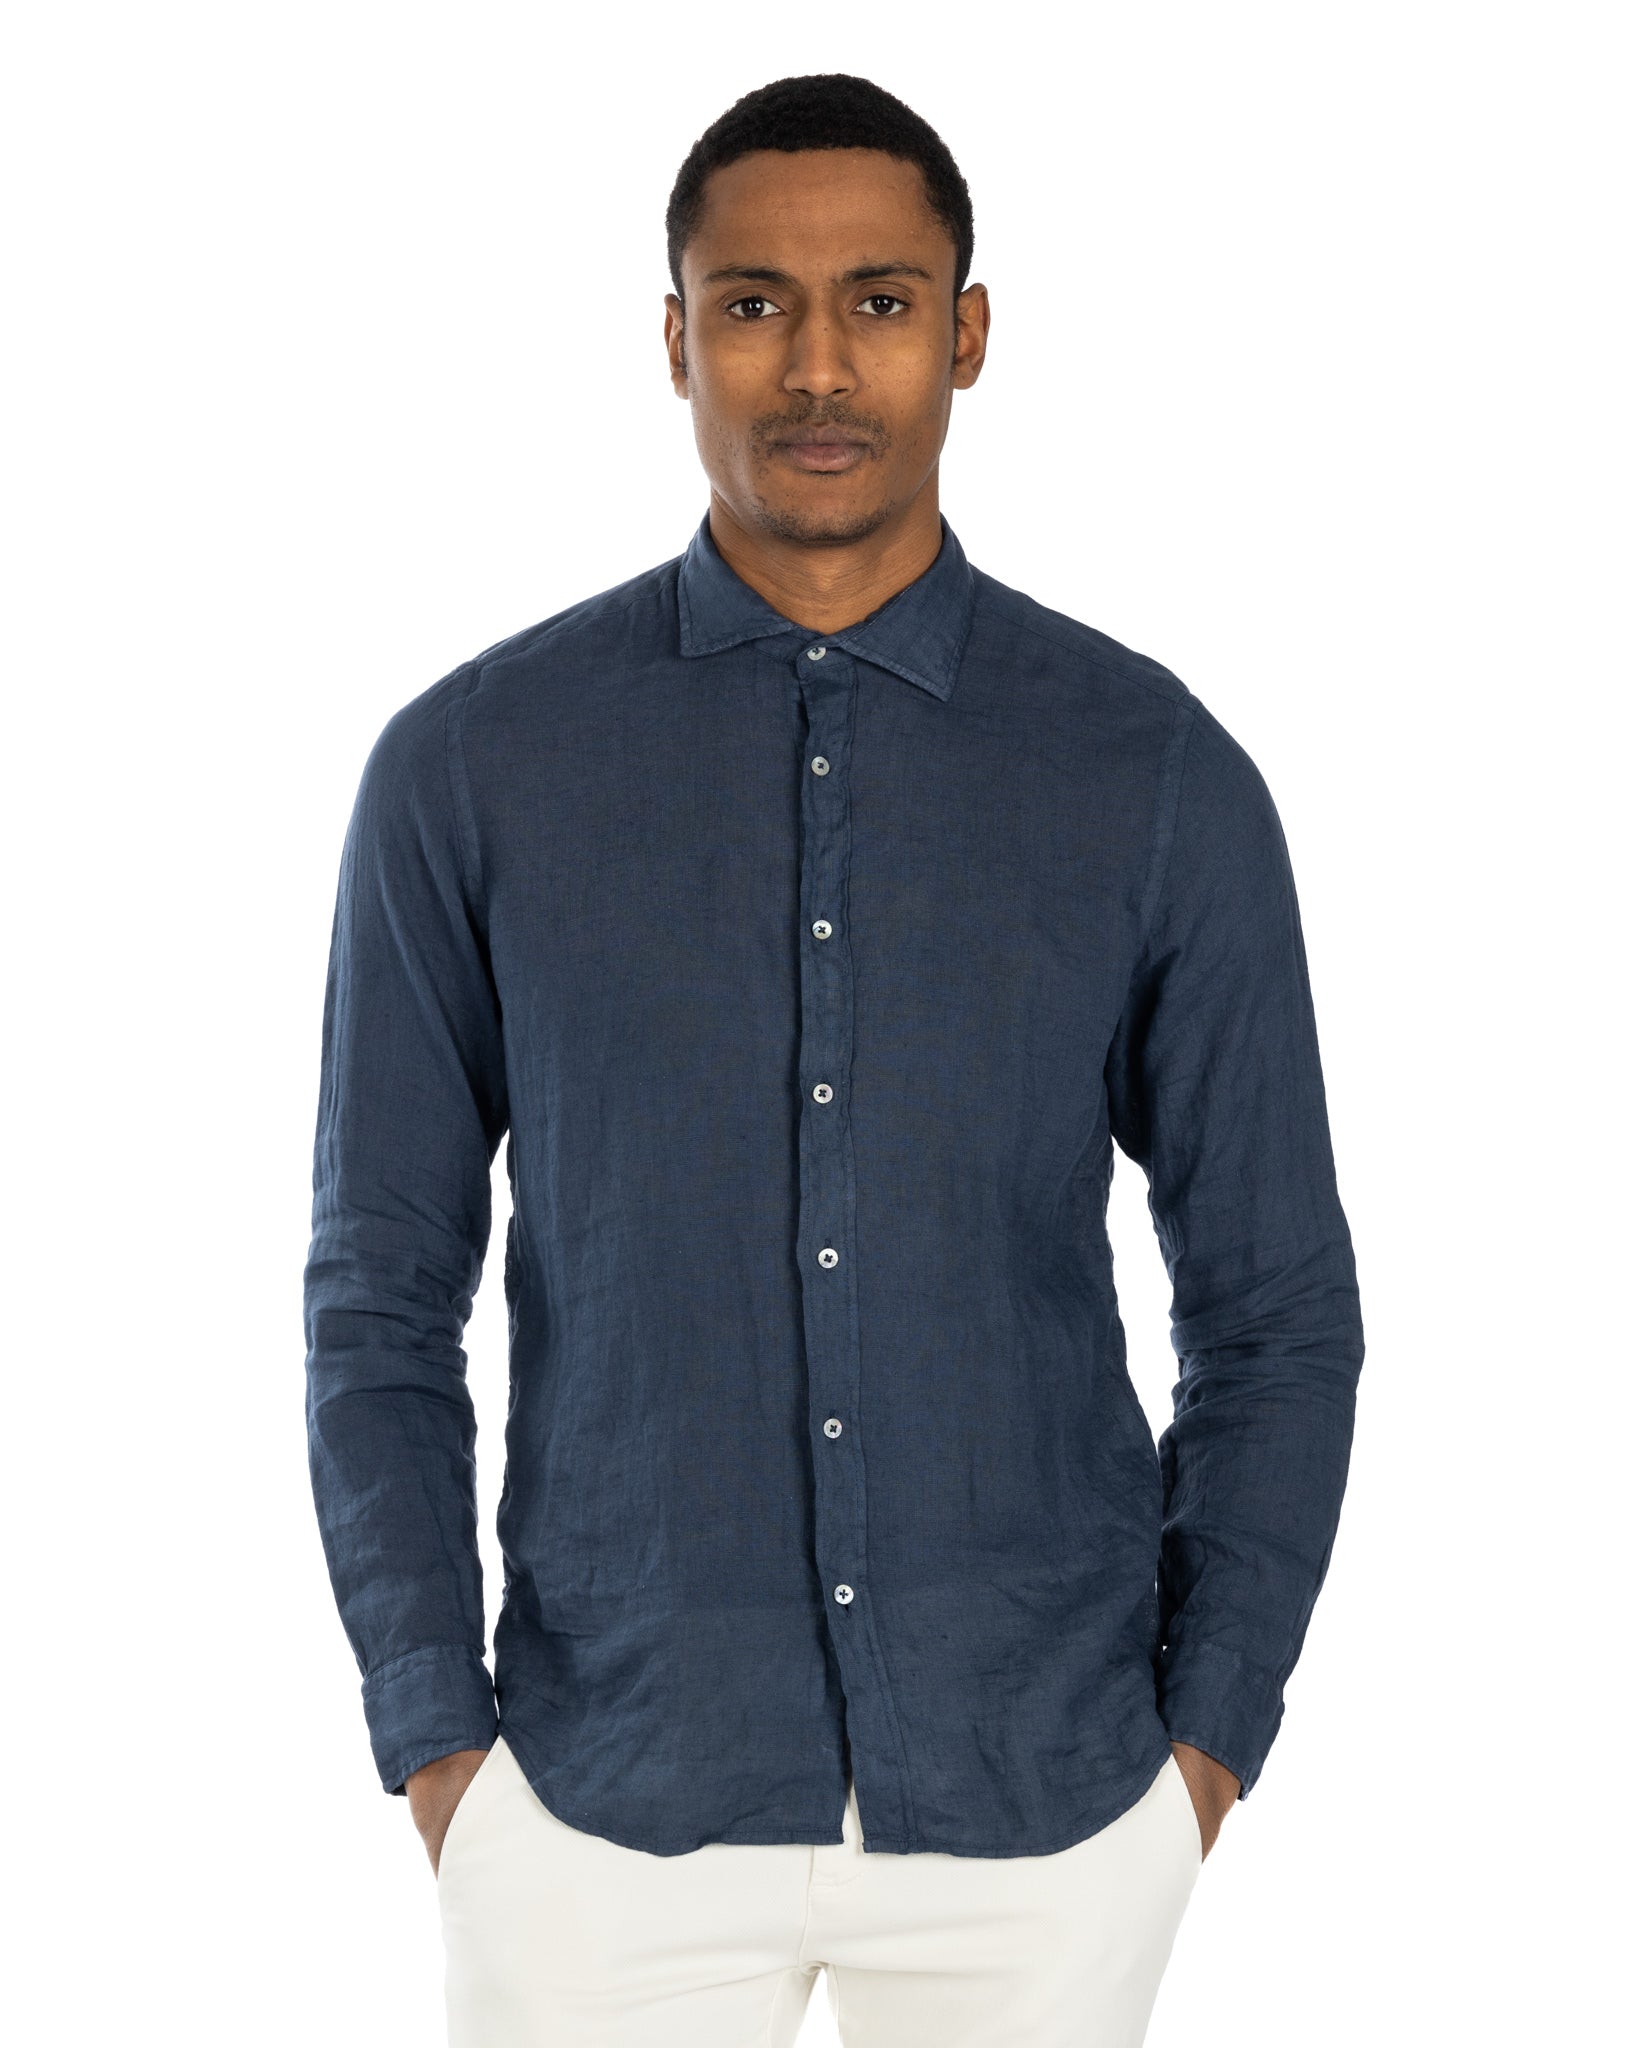 Montecarlo - blue pure linen shirt